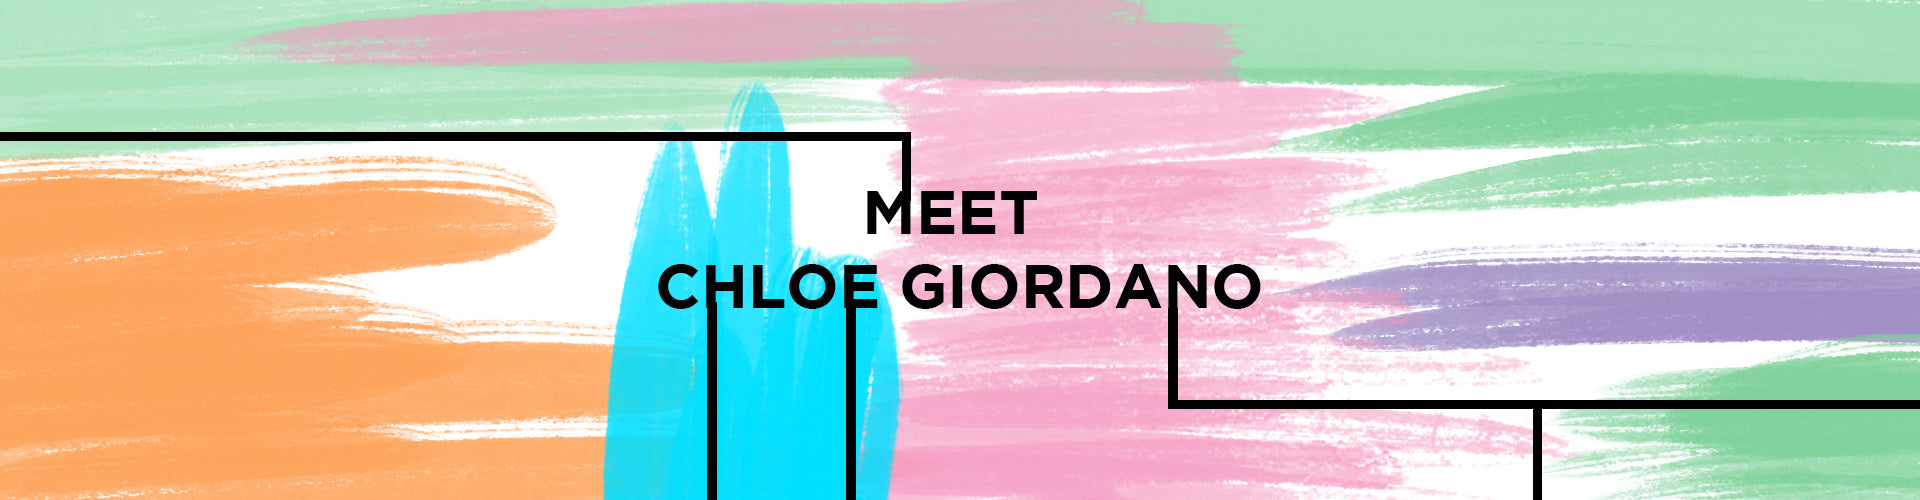 Meet Chloe Giordano